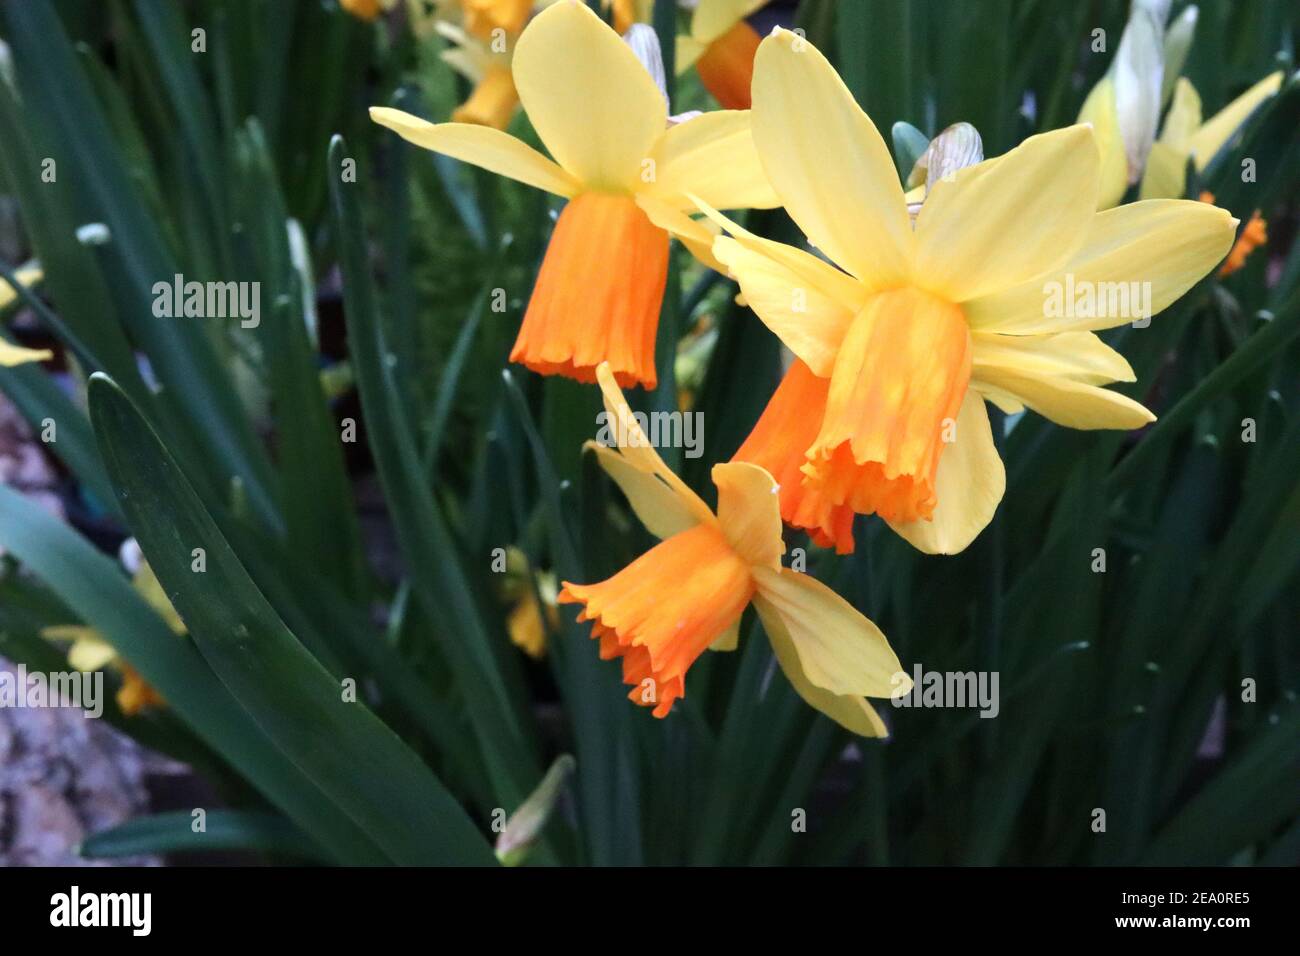 Narcissus ‘Jetfire’ / Daffodil Jetfire  Division 6 Cyclamineus Daffodils Miniature yellow daffodils with orange trumpets,  February, England, UK Stock Photo